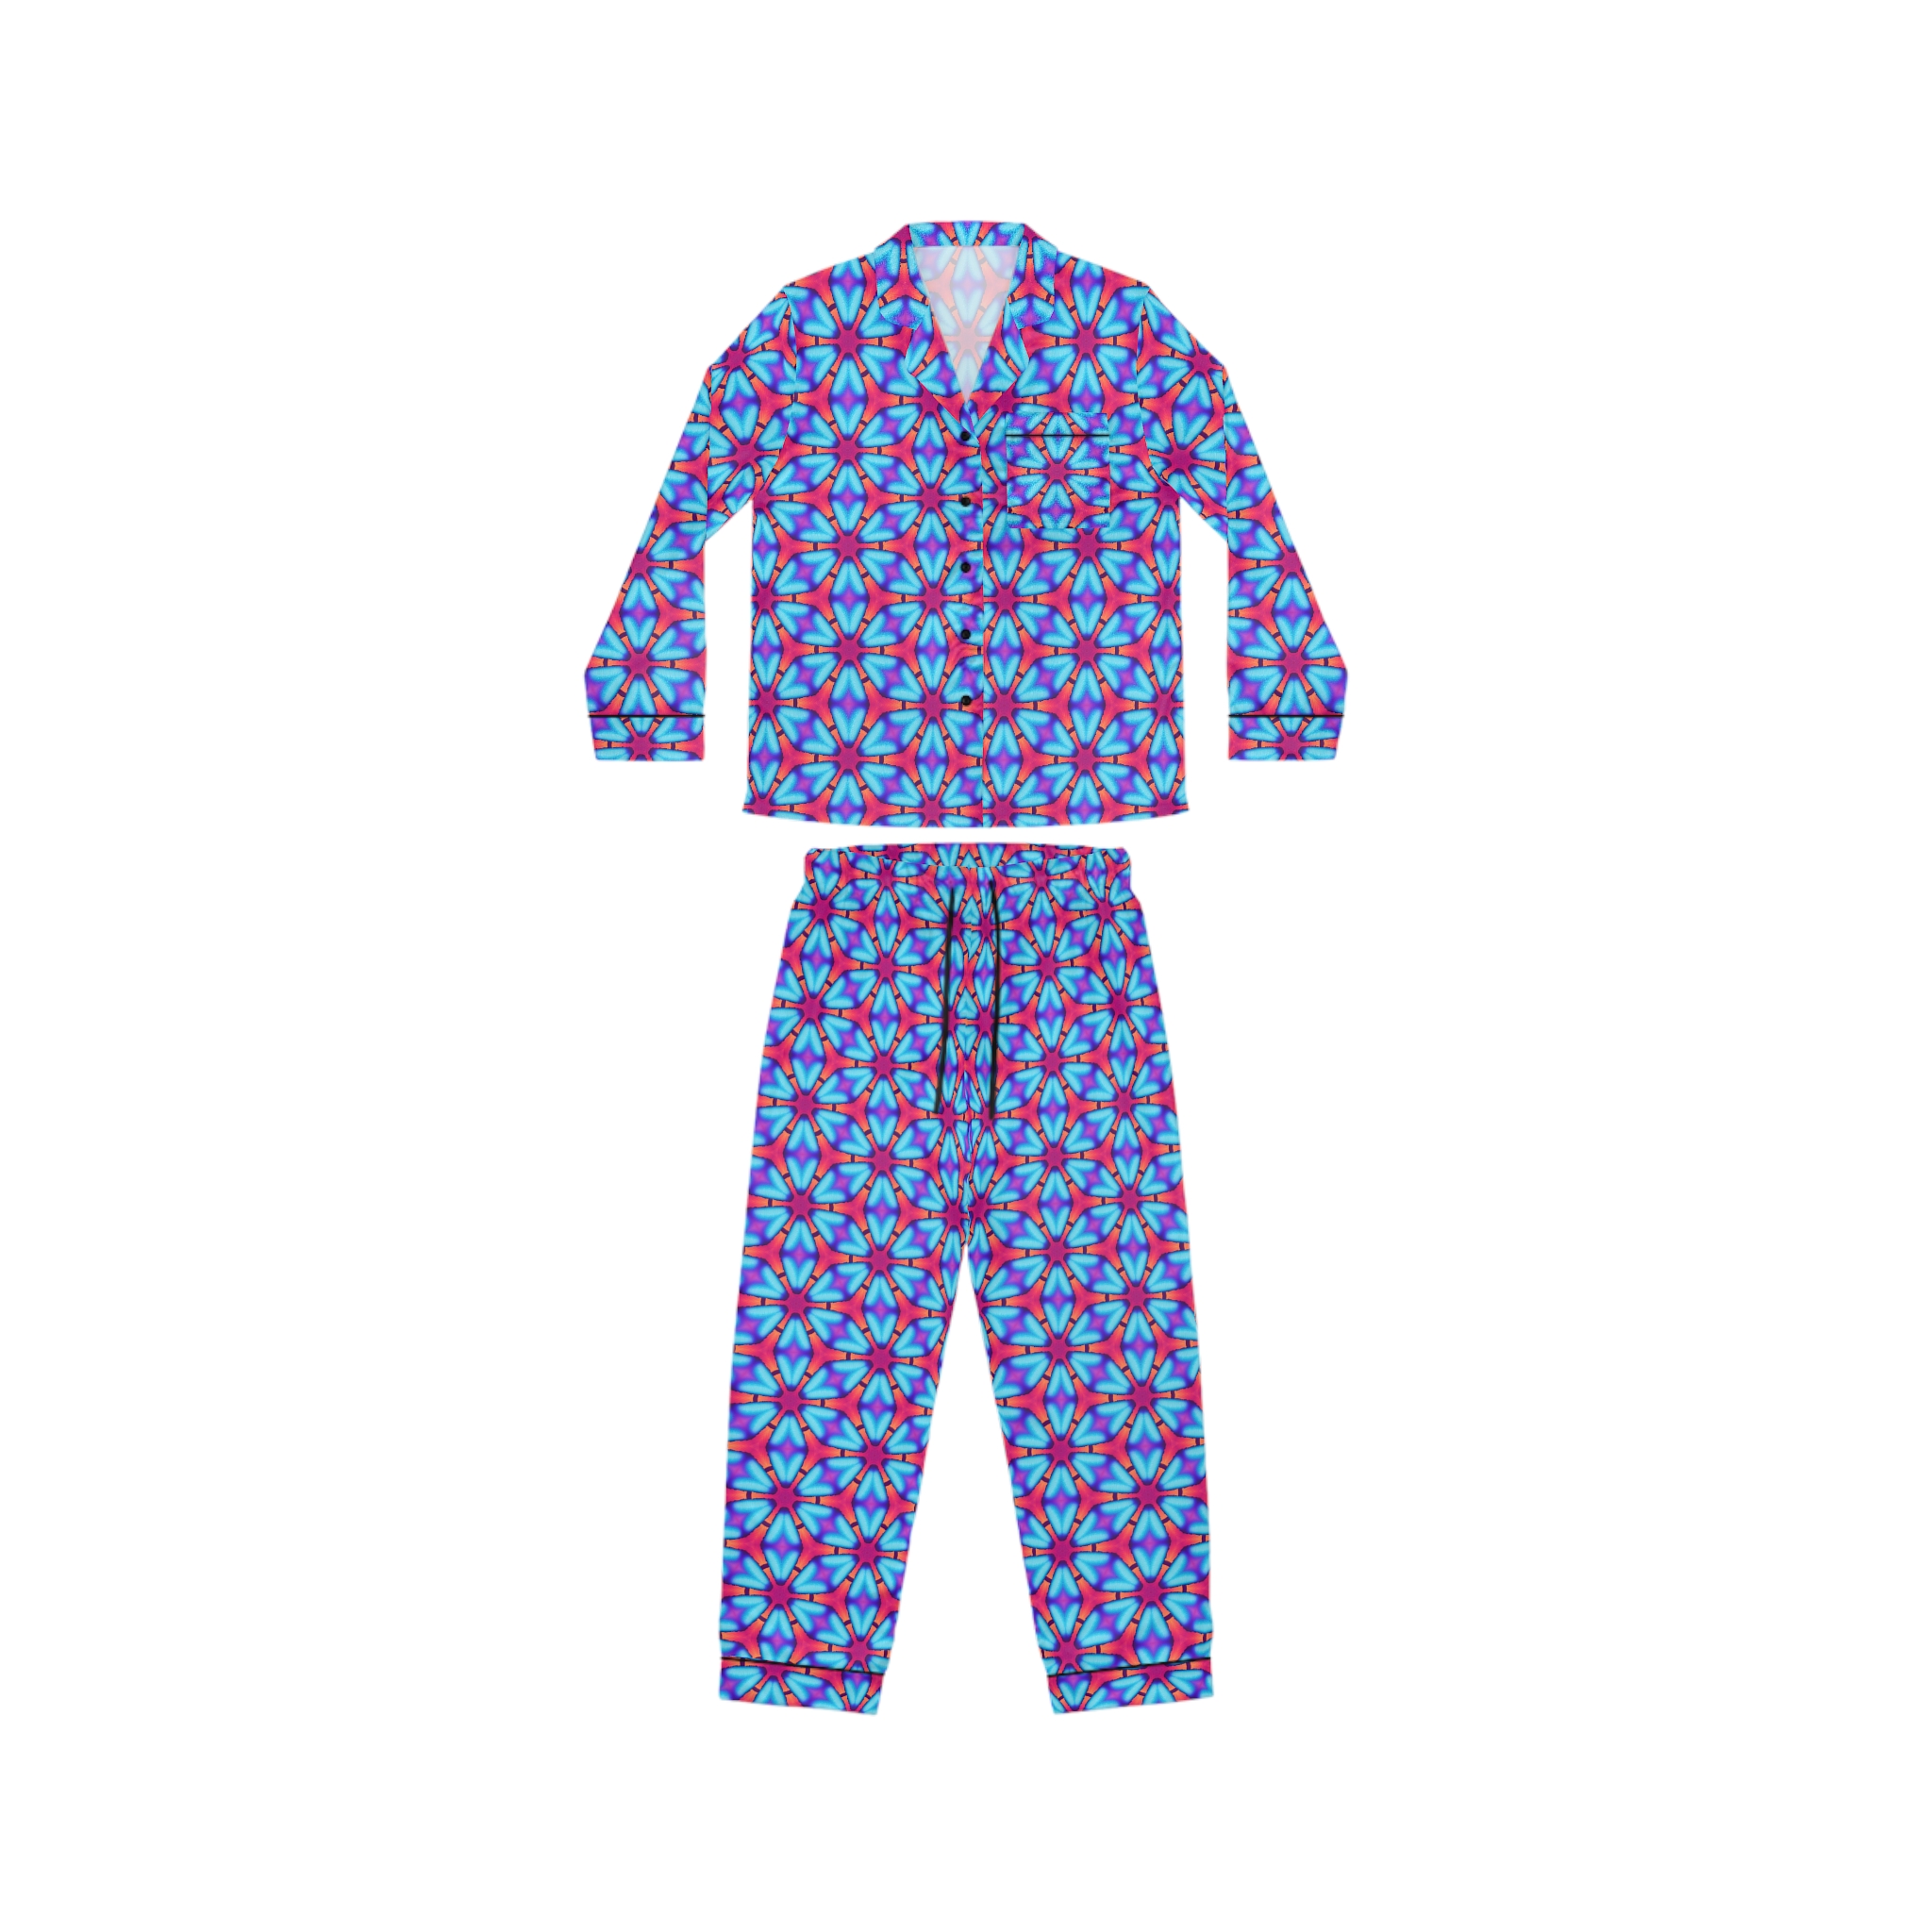 Trippy loungewear pajama set